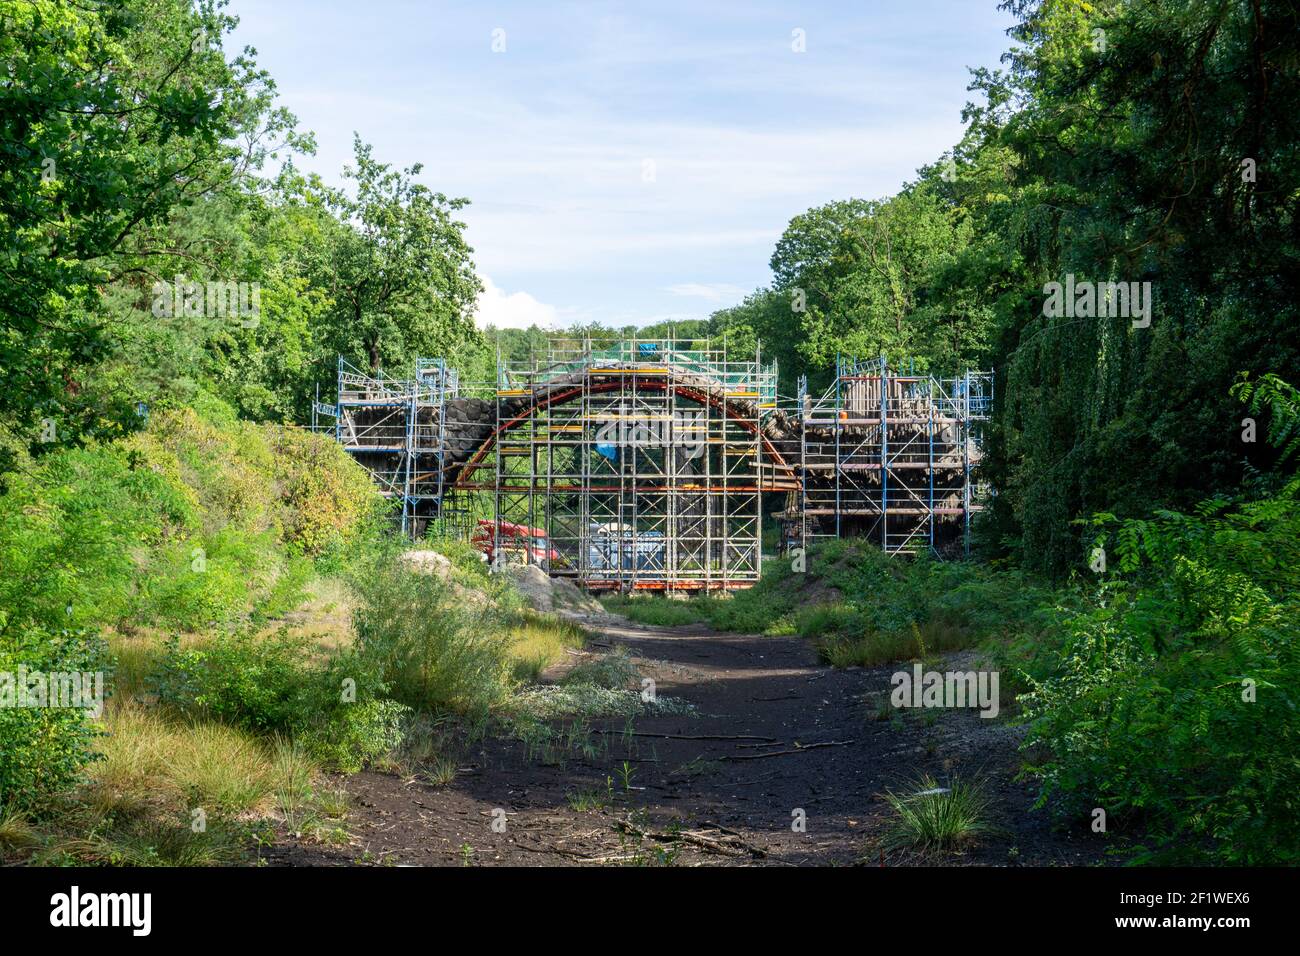 View of the historic Rakotz Bridge covered in scaffolding for renovation work Stock Photo